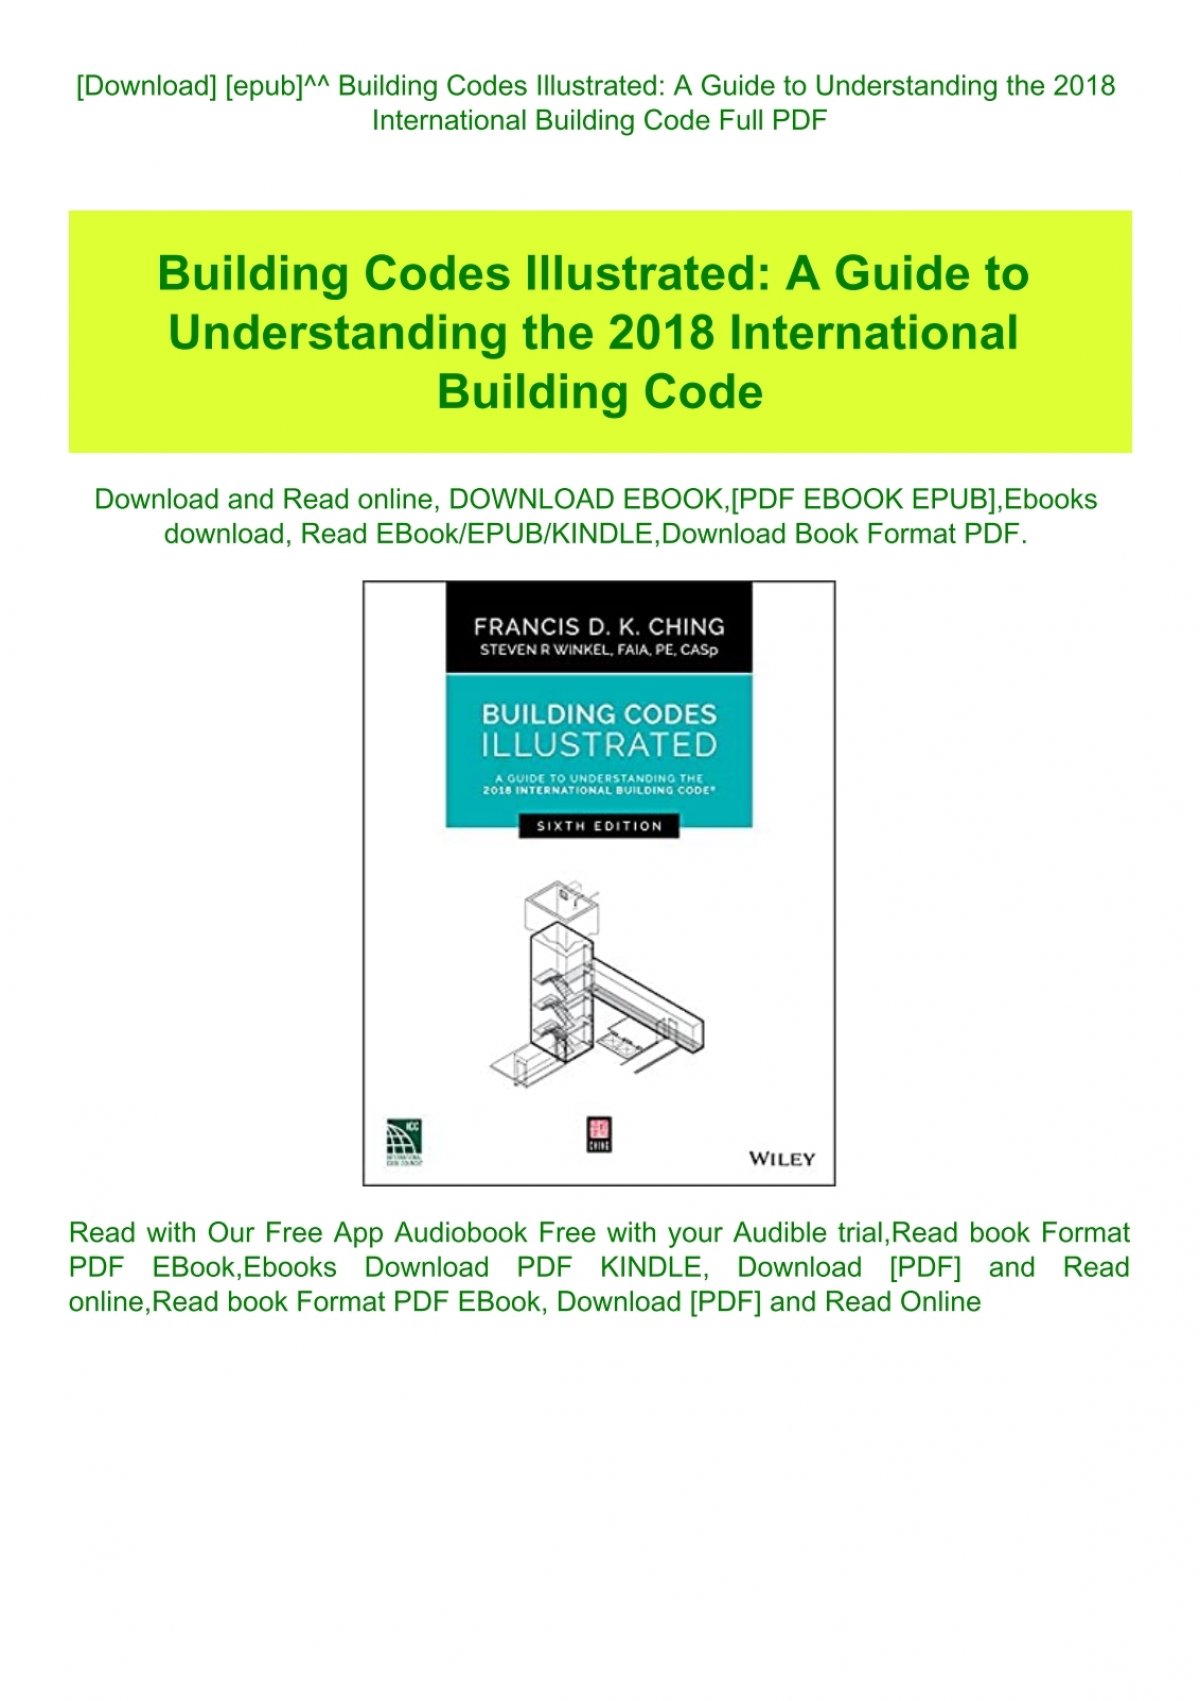 2018 international building code illustrated handbook download